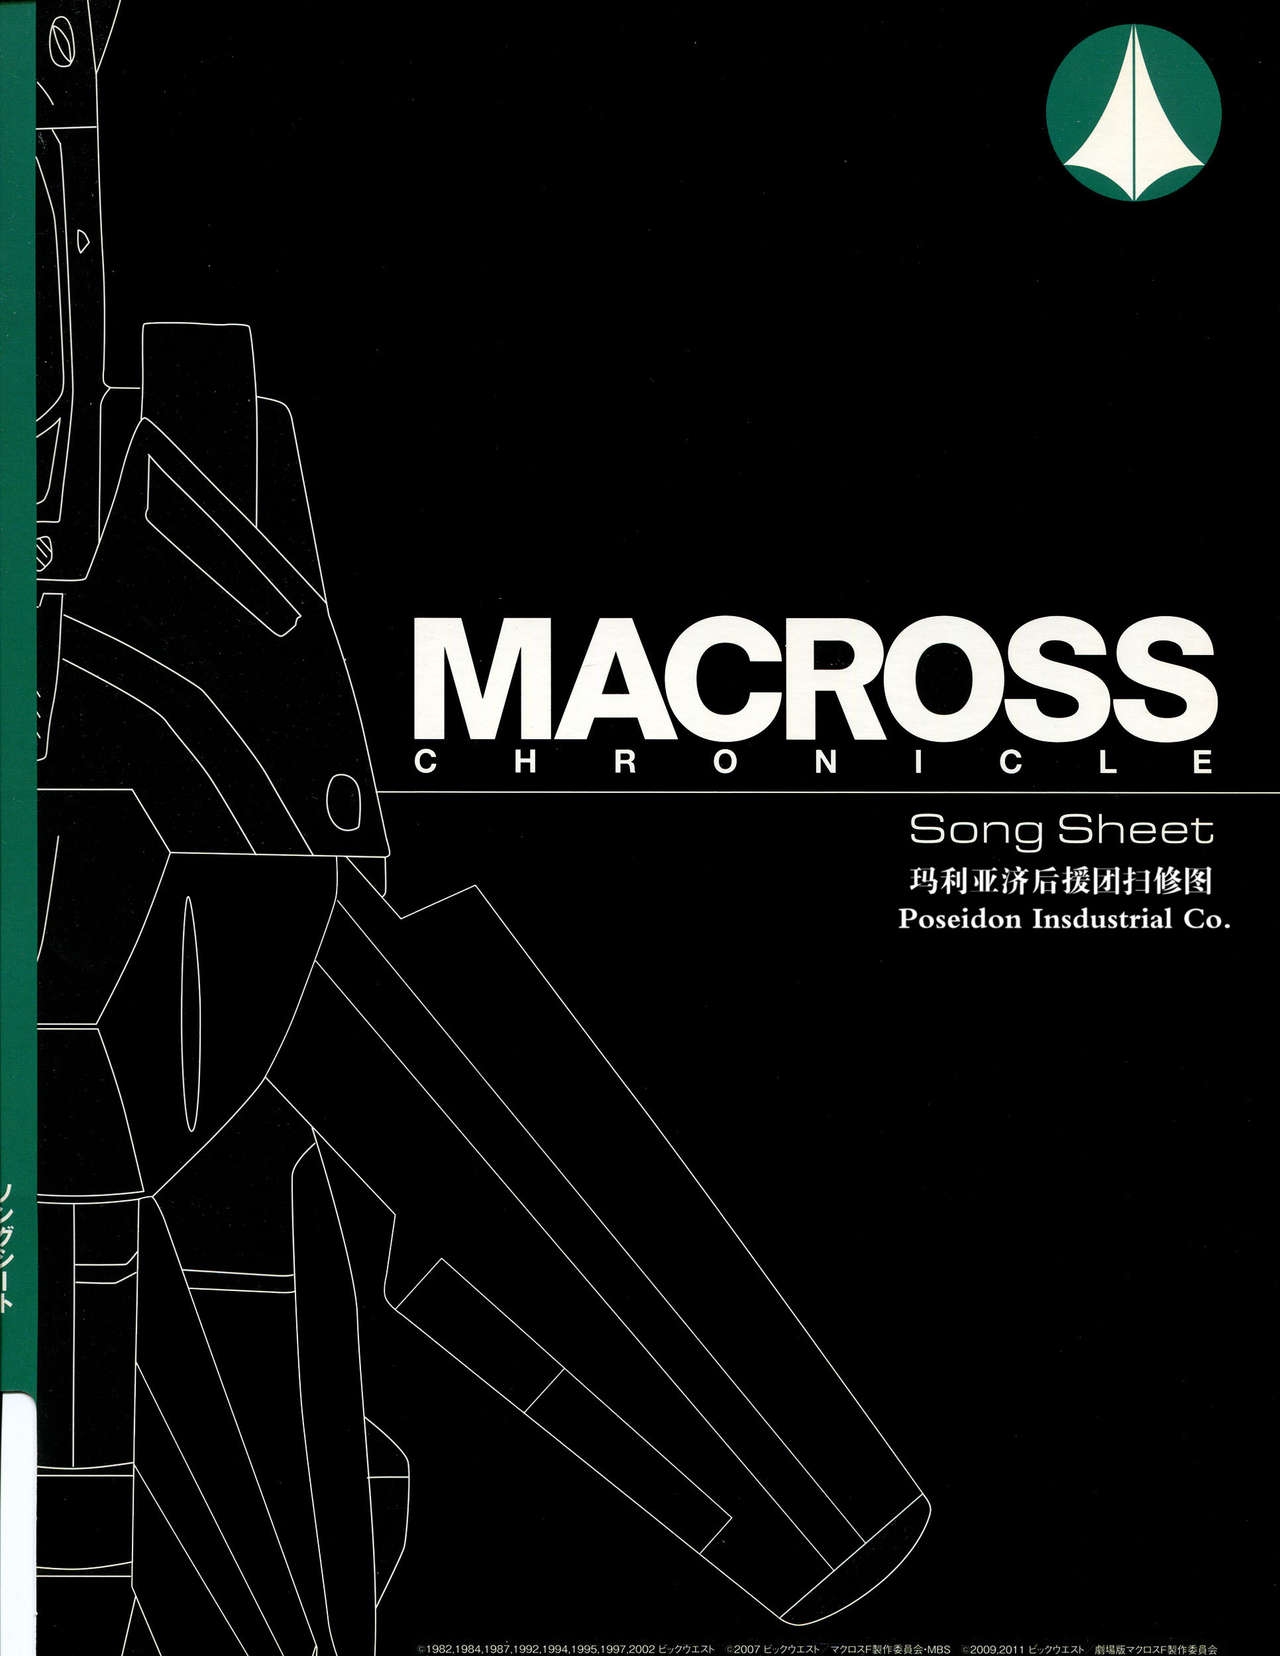 Macross Chronicle - 30th Anniversary (11/13) - Song Sheet 1